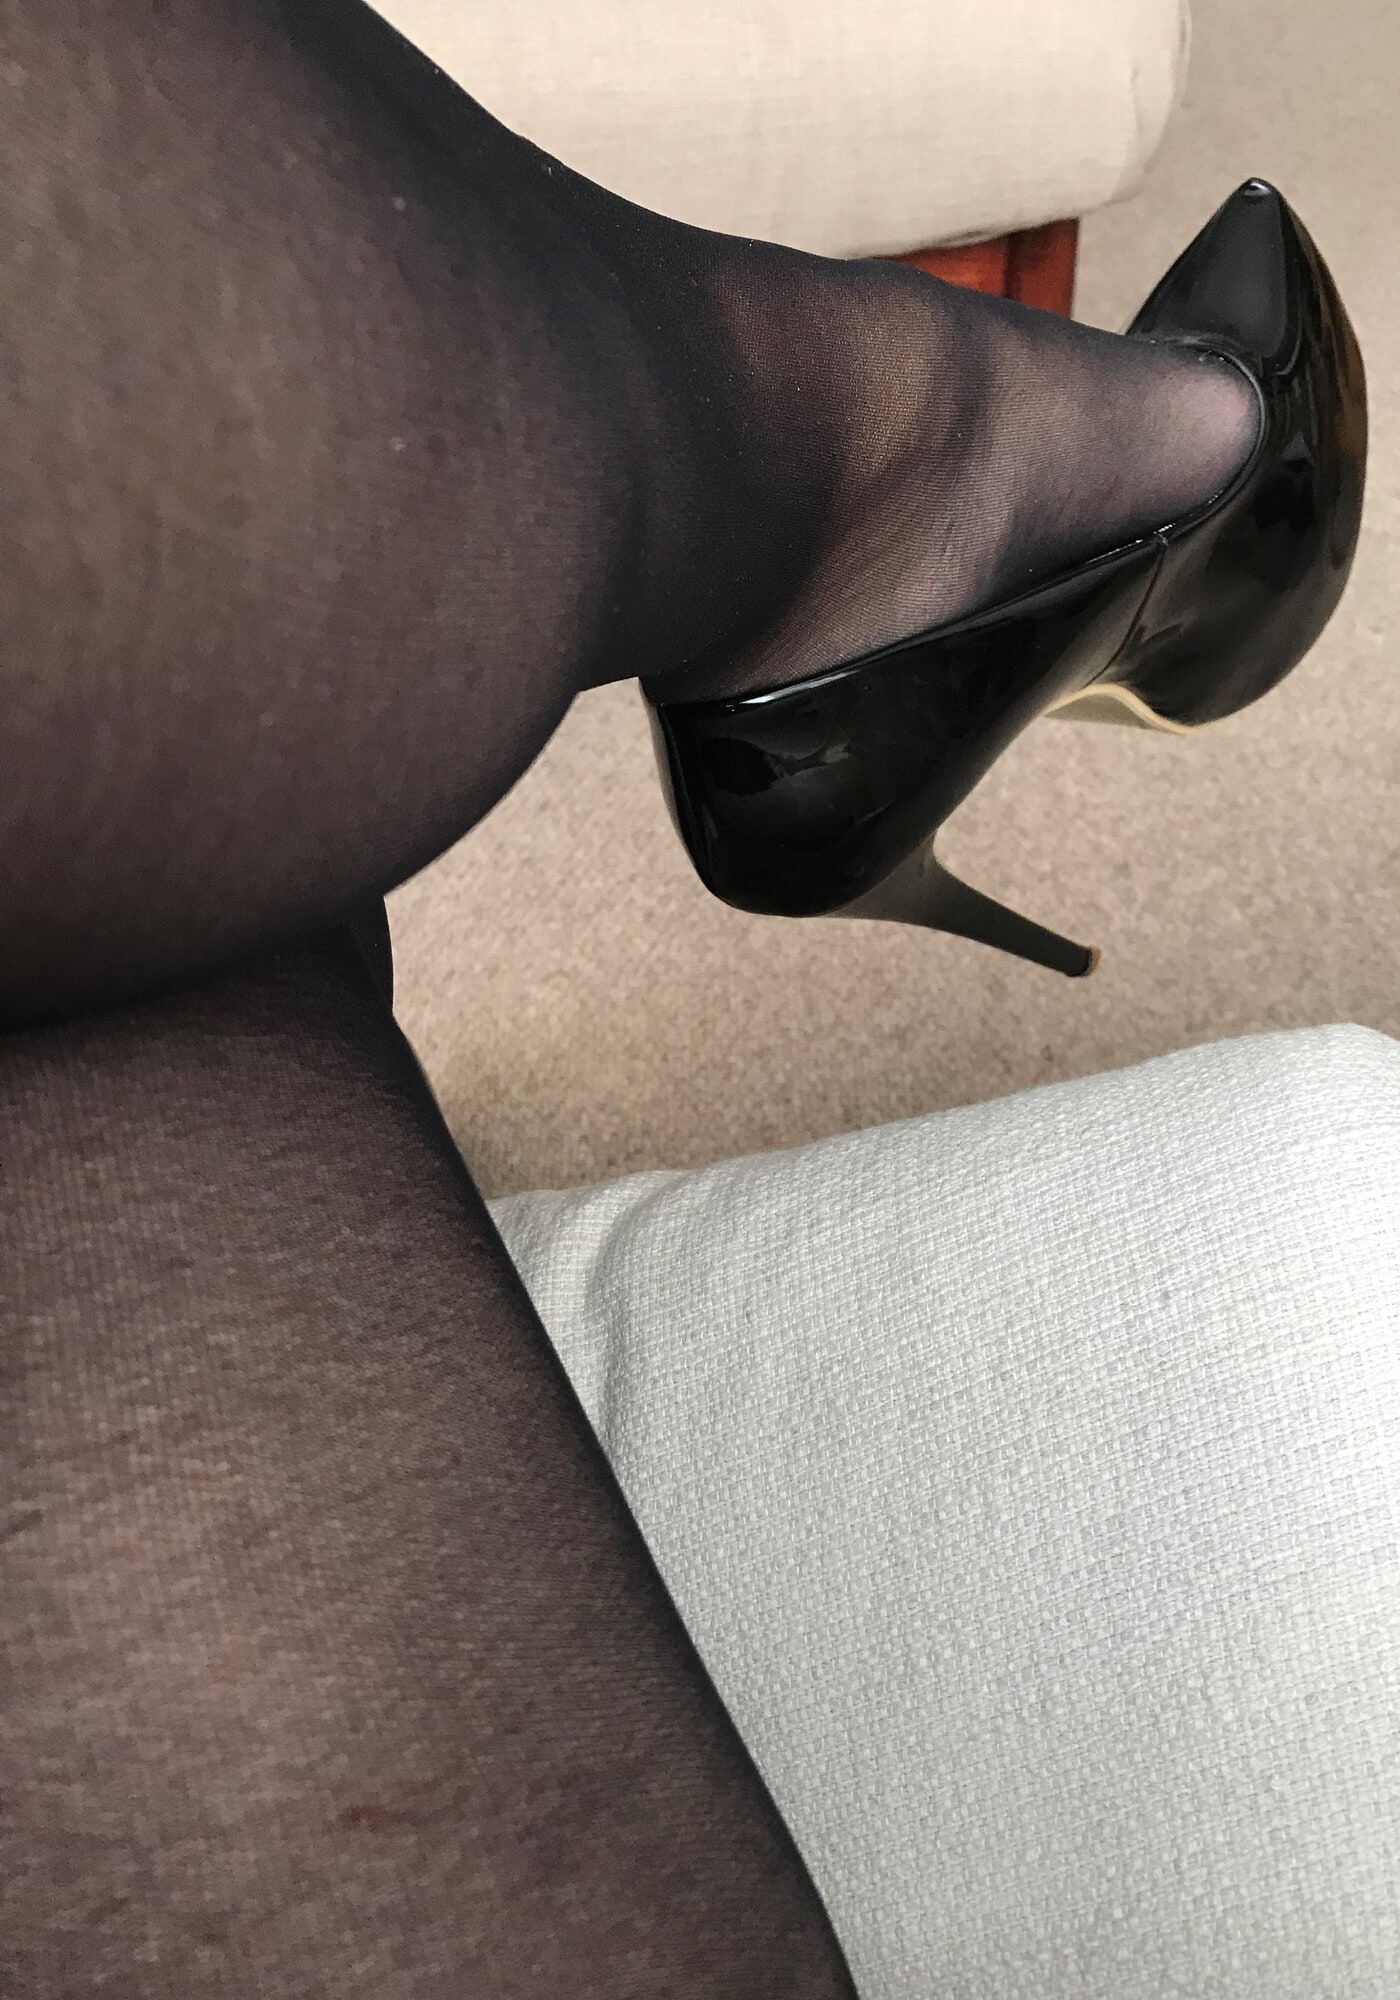 black tights & heels close-up #17